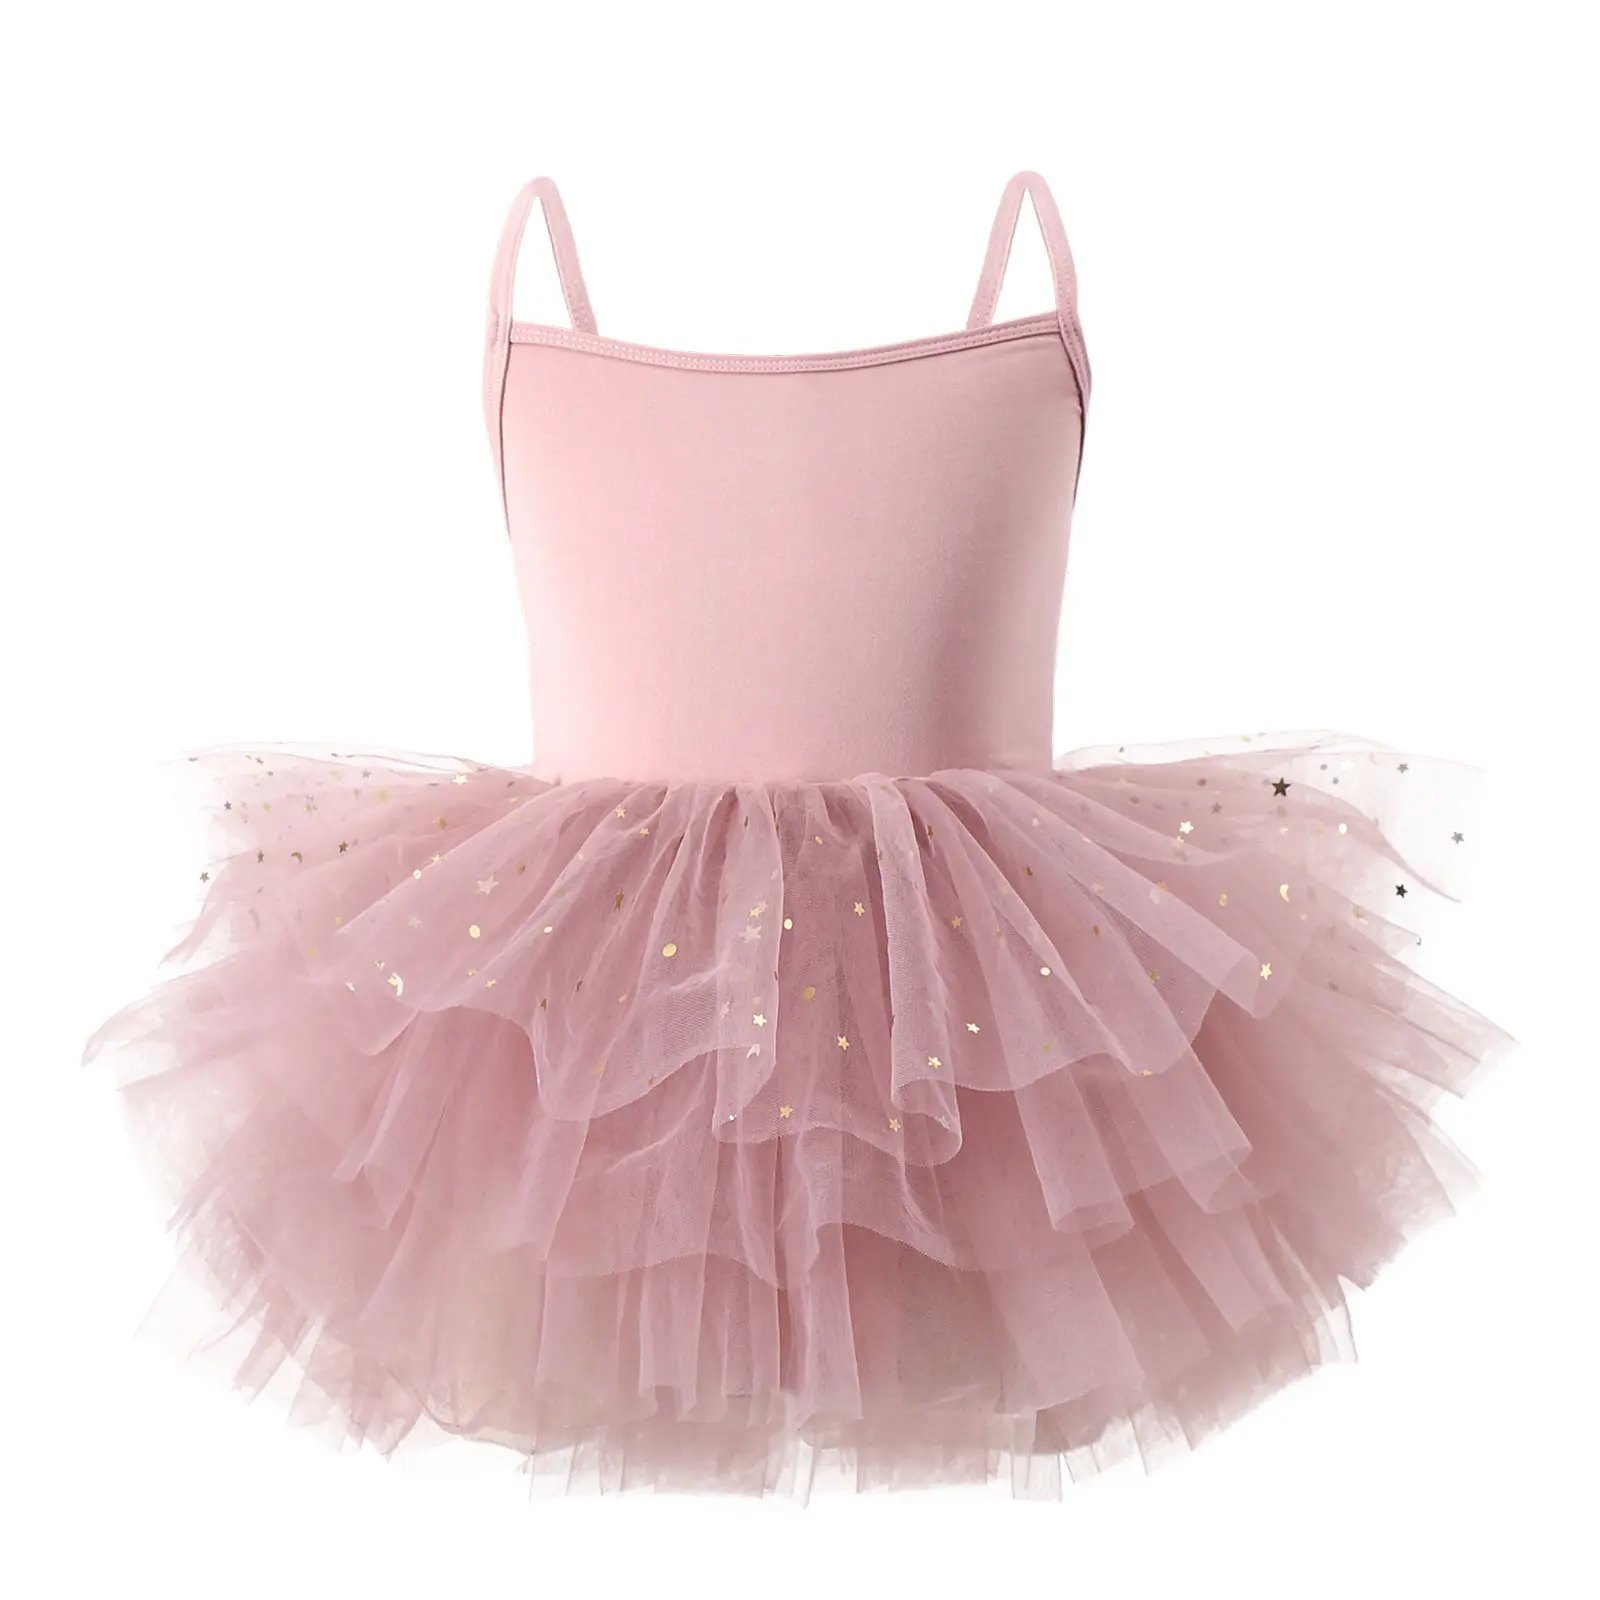 Gaun balet bintang tali Spaghetti berkilau sutra susu merah muda rok Tutu anak-anak baju monyet Bodycon bayi Jumpsuit